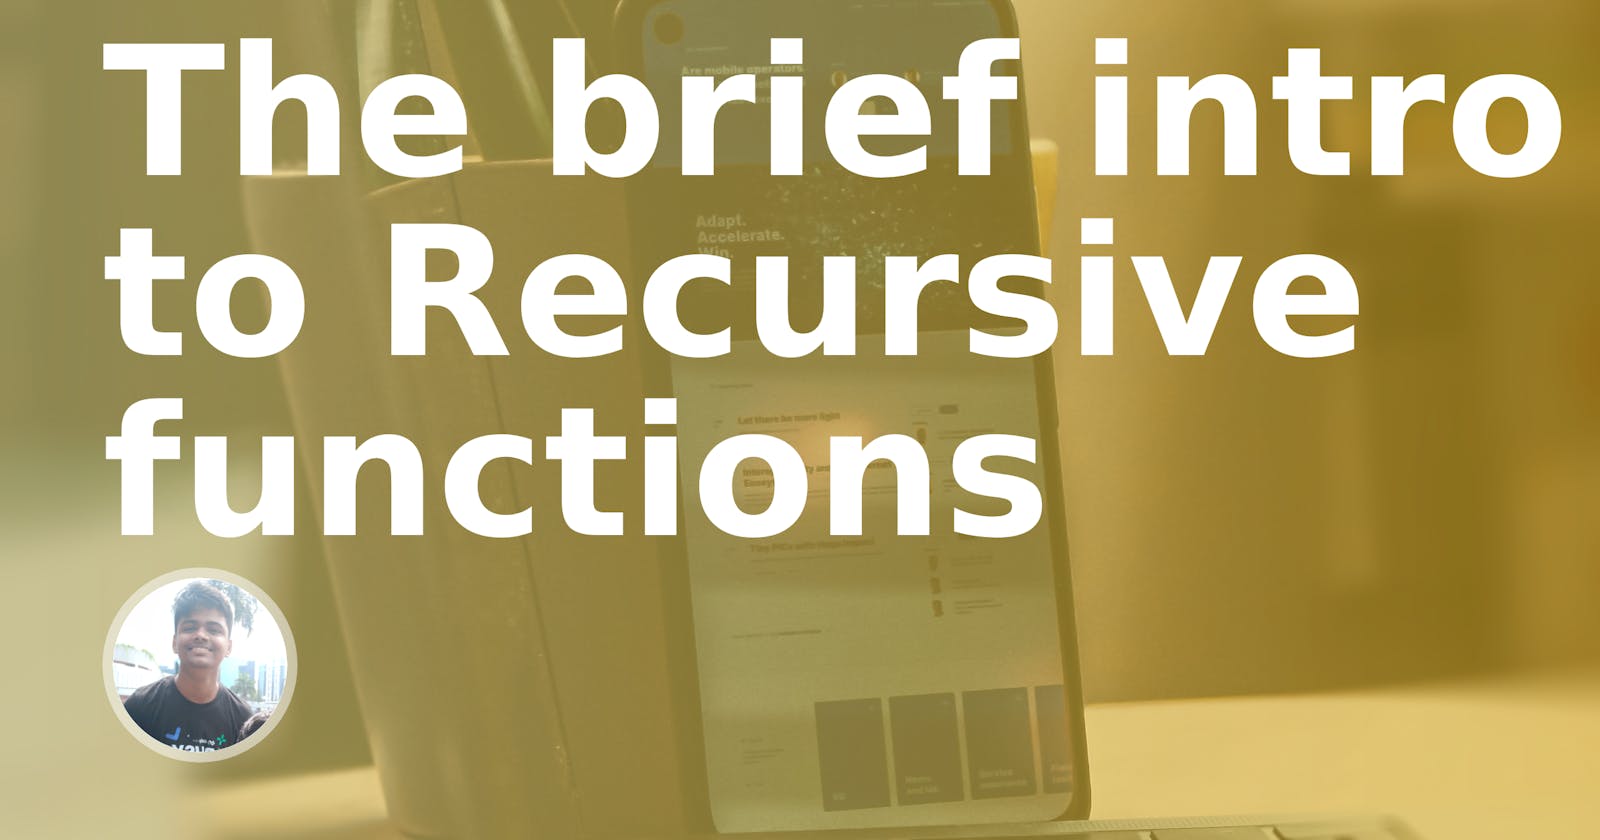 The brief intro to Recursive functions